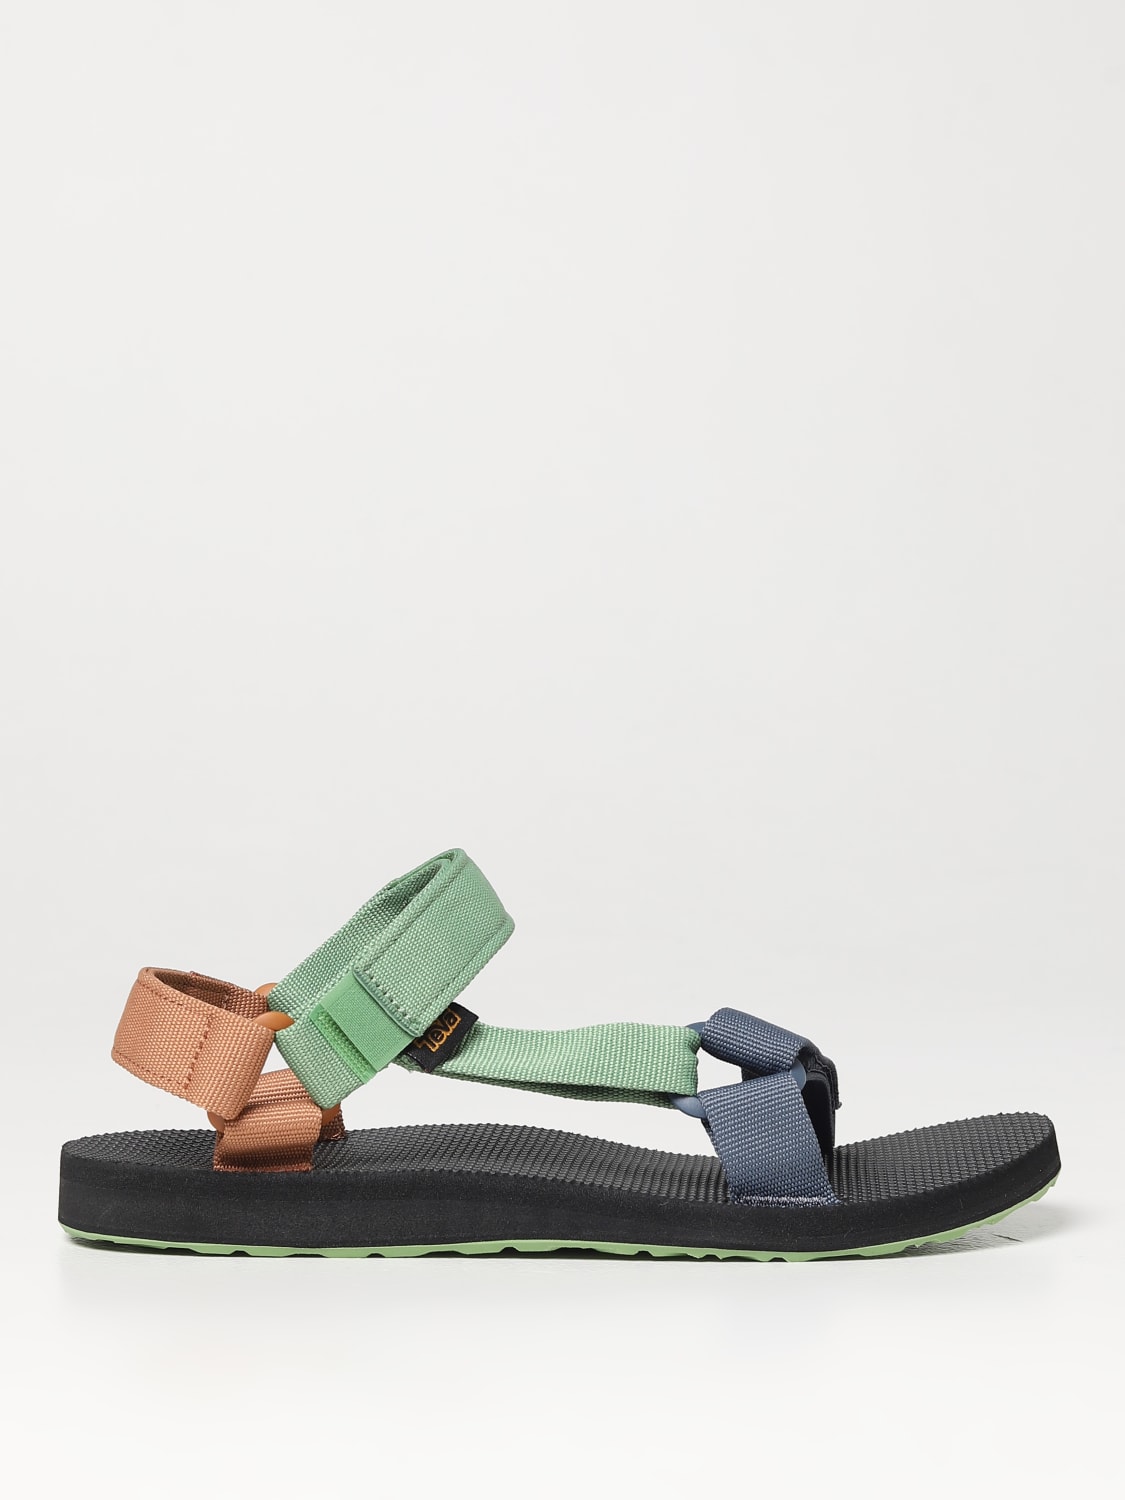 Waden Sluiting Overtollig TEVA: sandals for man - Multicolor | Teva sandals 1004006 online on  GIGLIO.COM